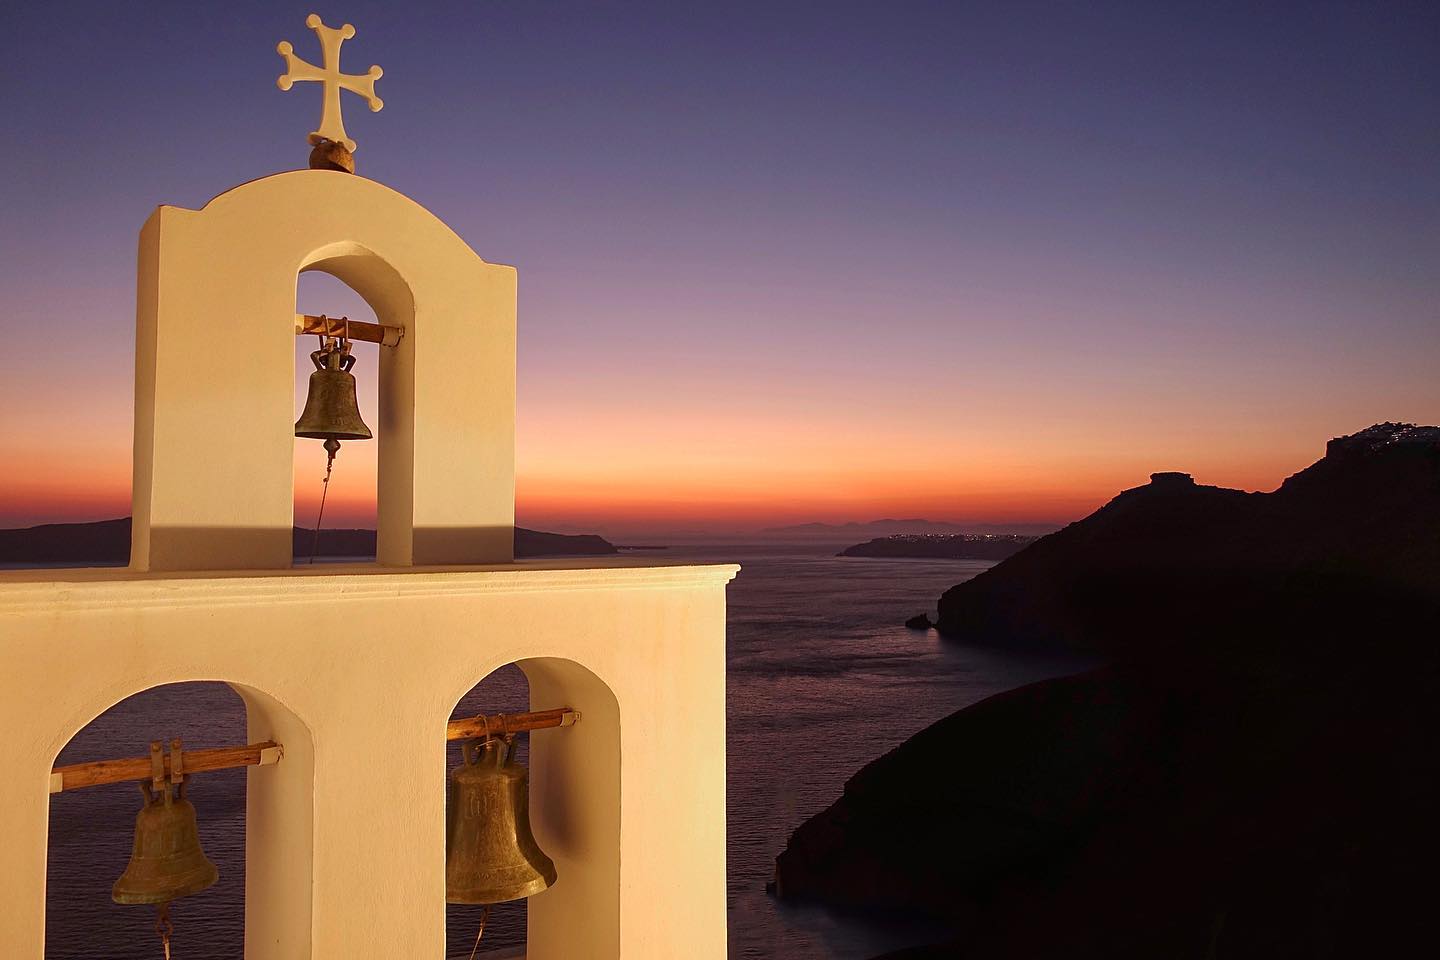 Sunset 🌅
.
.
.
#santorini #greece #fira #sunset #caldera #calderasunset #sunsetlover #griechenland #santorinigreece #santoriniisland #greece_travel #greeceislands #greecestagram #sea #view #viewpoint #sunsetphotography #travel #santoriniview #santorinigram #sunset_pics #greece_moments #greece_vacations #greeceholiday #santorinistyle #greekislands #greekstyle #thirasantorini #fira #firasantorini #volcano